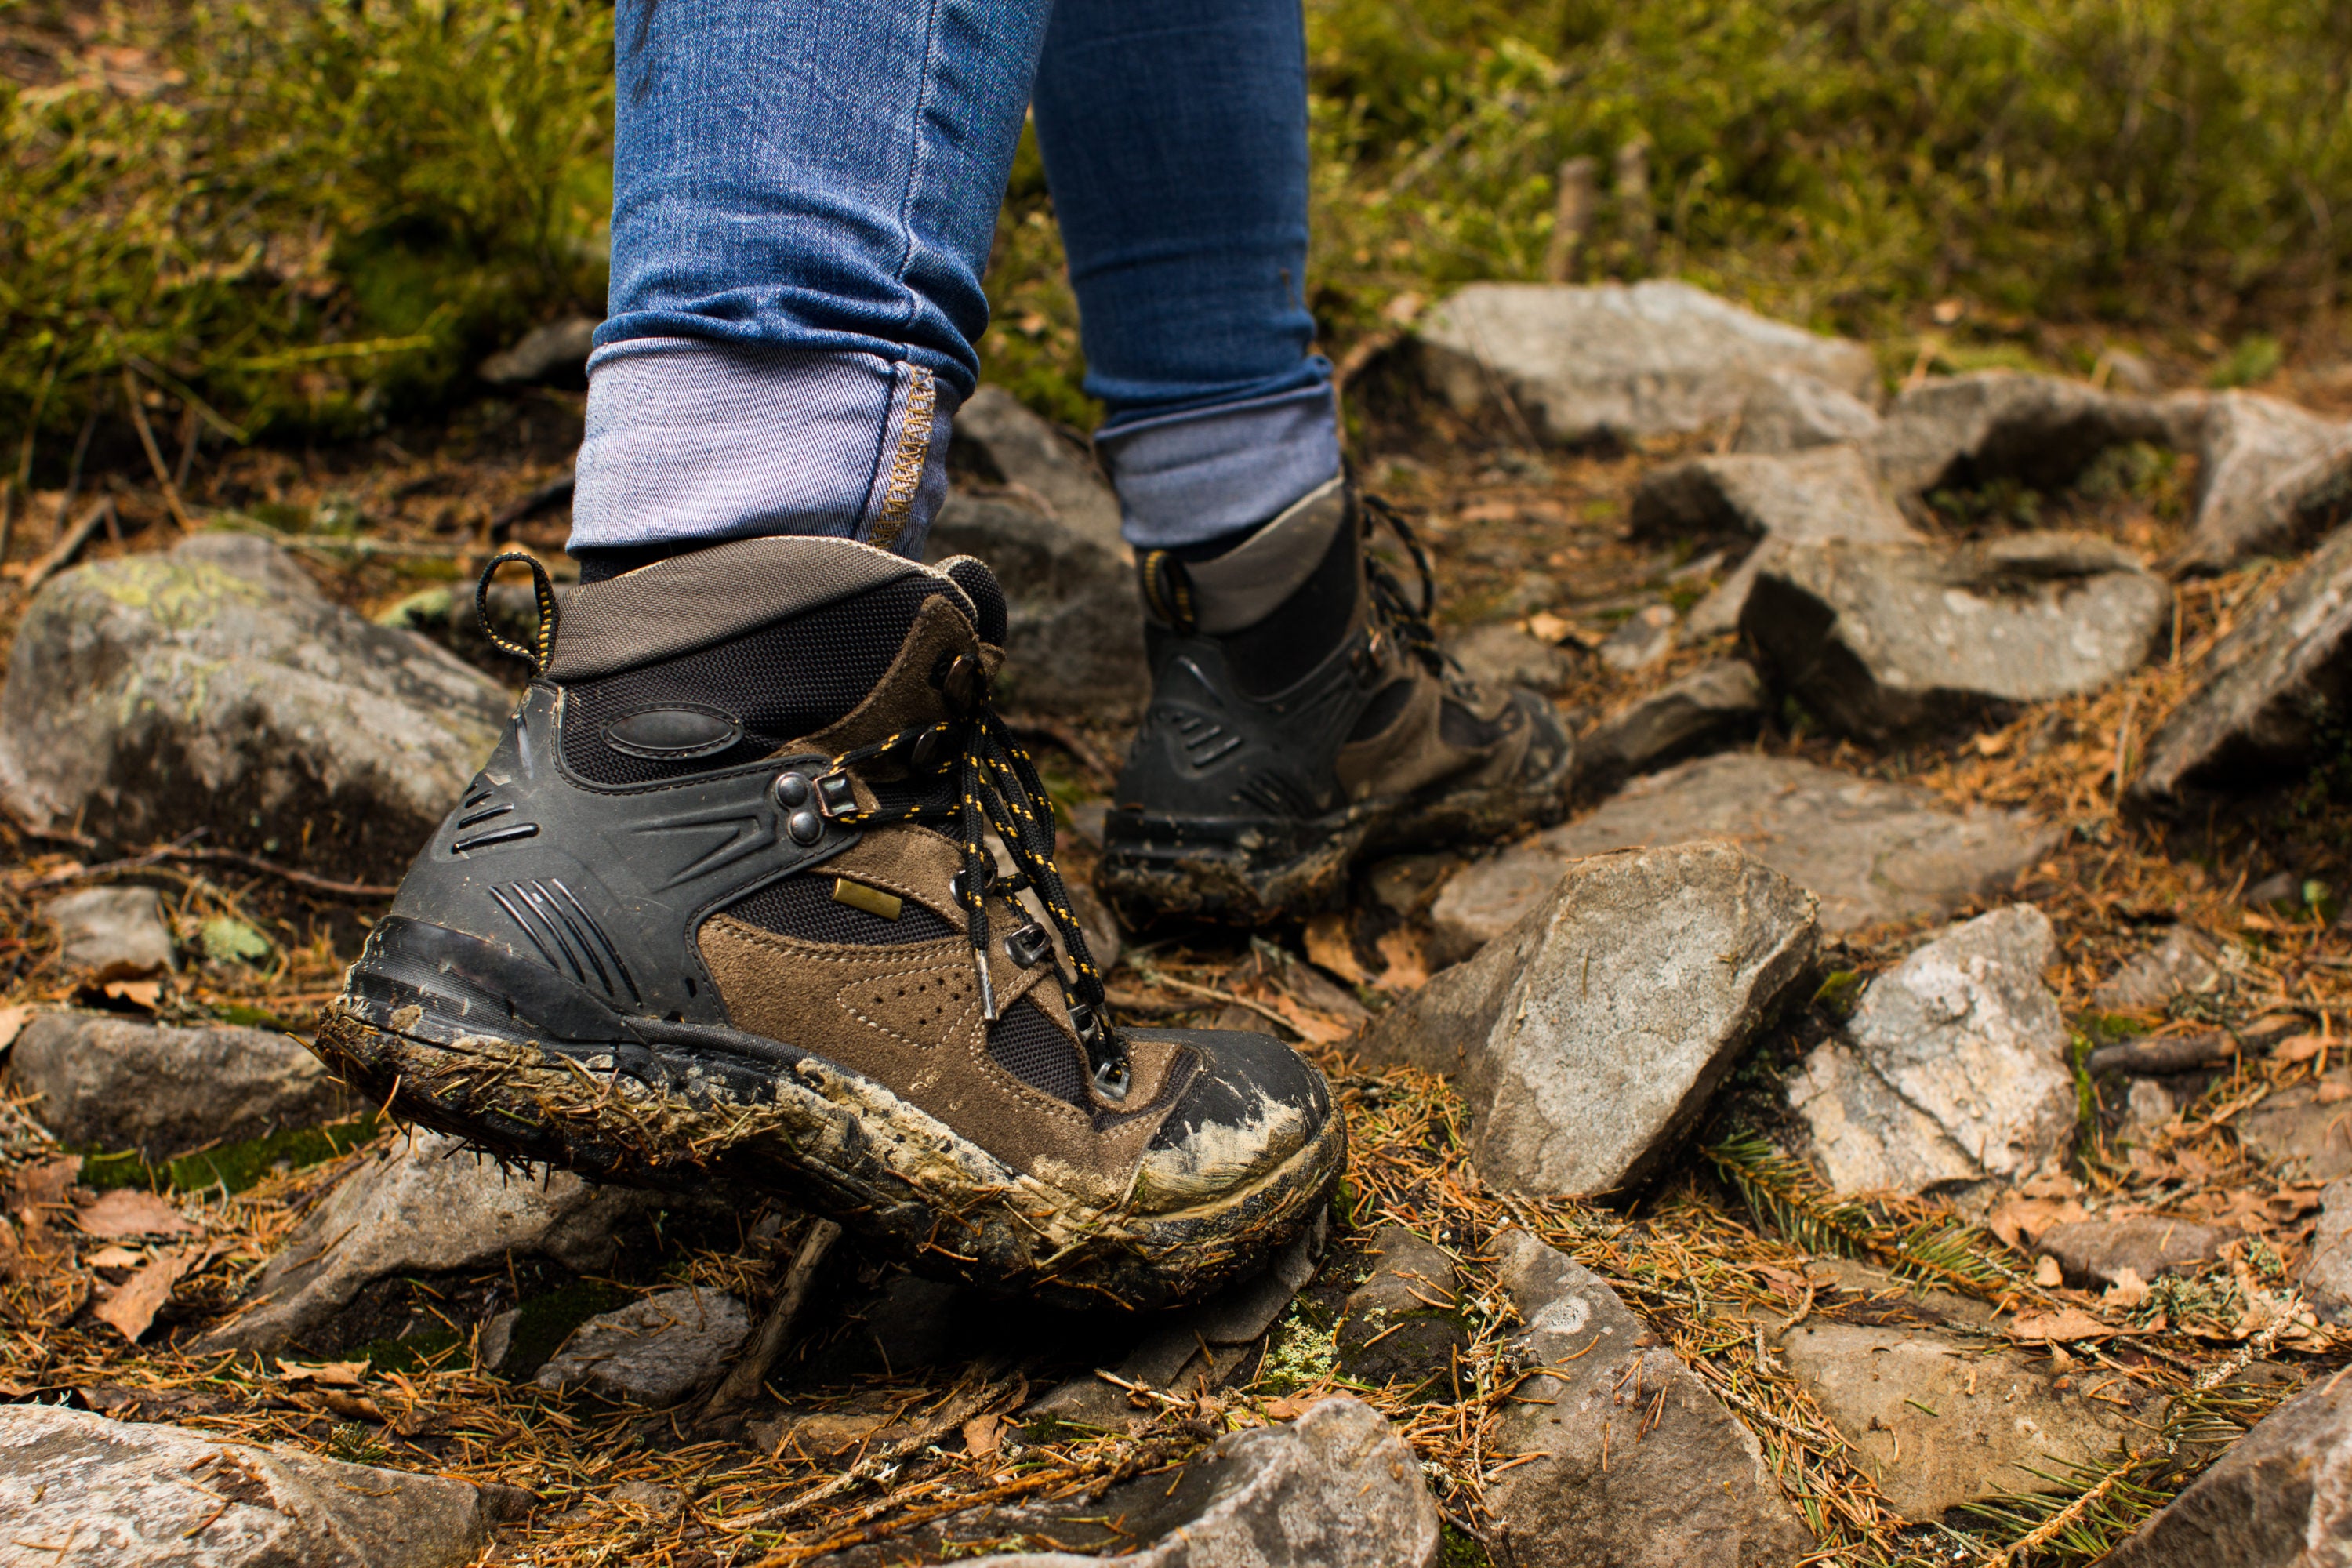 Quickshark Mens Work Boots Outdoor Hiking Boot Trekking Walking Camping Traveling Casual Wide Water-Resistant Shoes